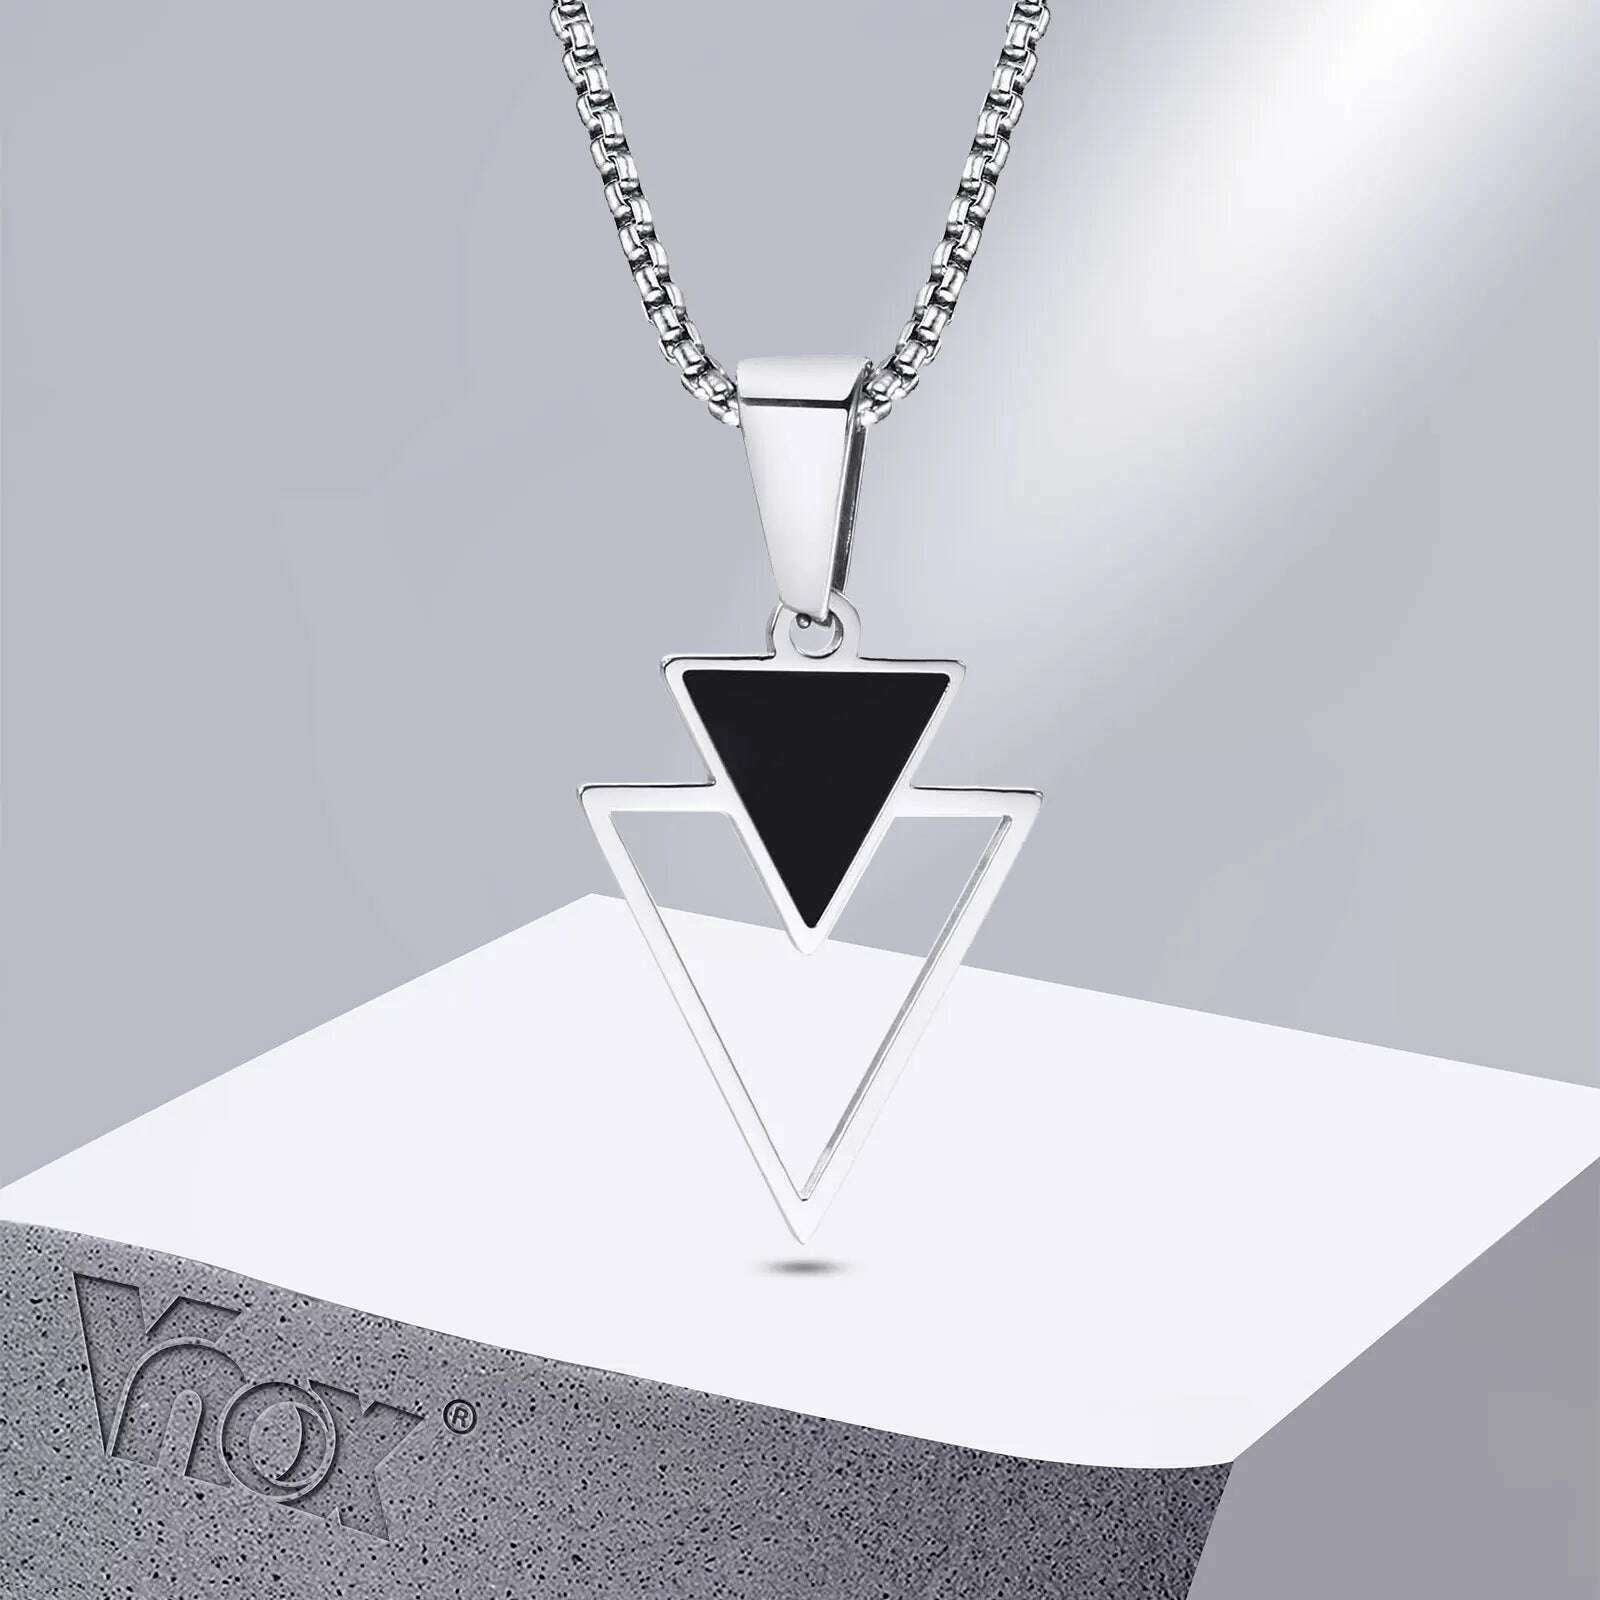 KIMLUD, Vnox New Fashion Triangle Pendant Necklace for Men Boys, Minimalist Stainless Steel Hollow Geometric Collar Male Jewelry Gift, KIMLUD Women's Clothes